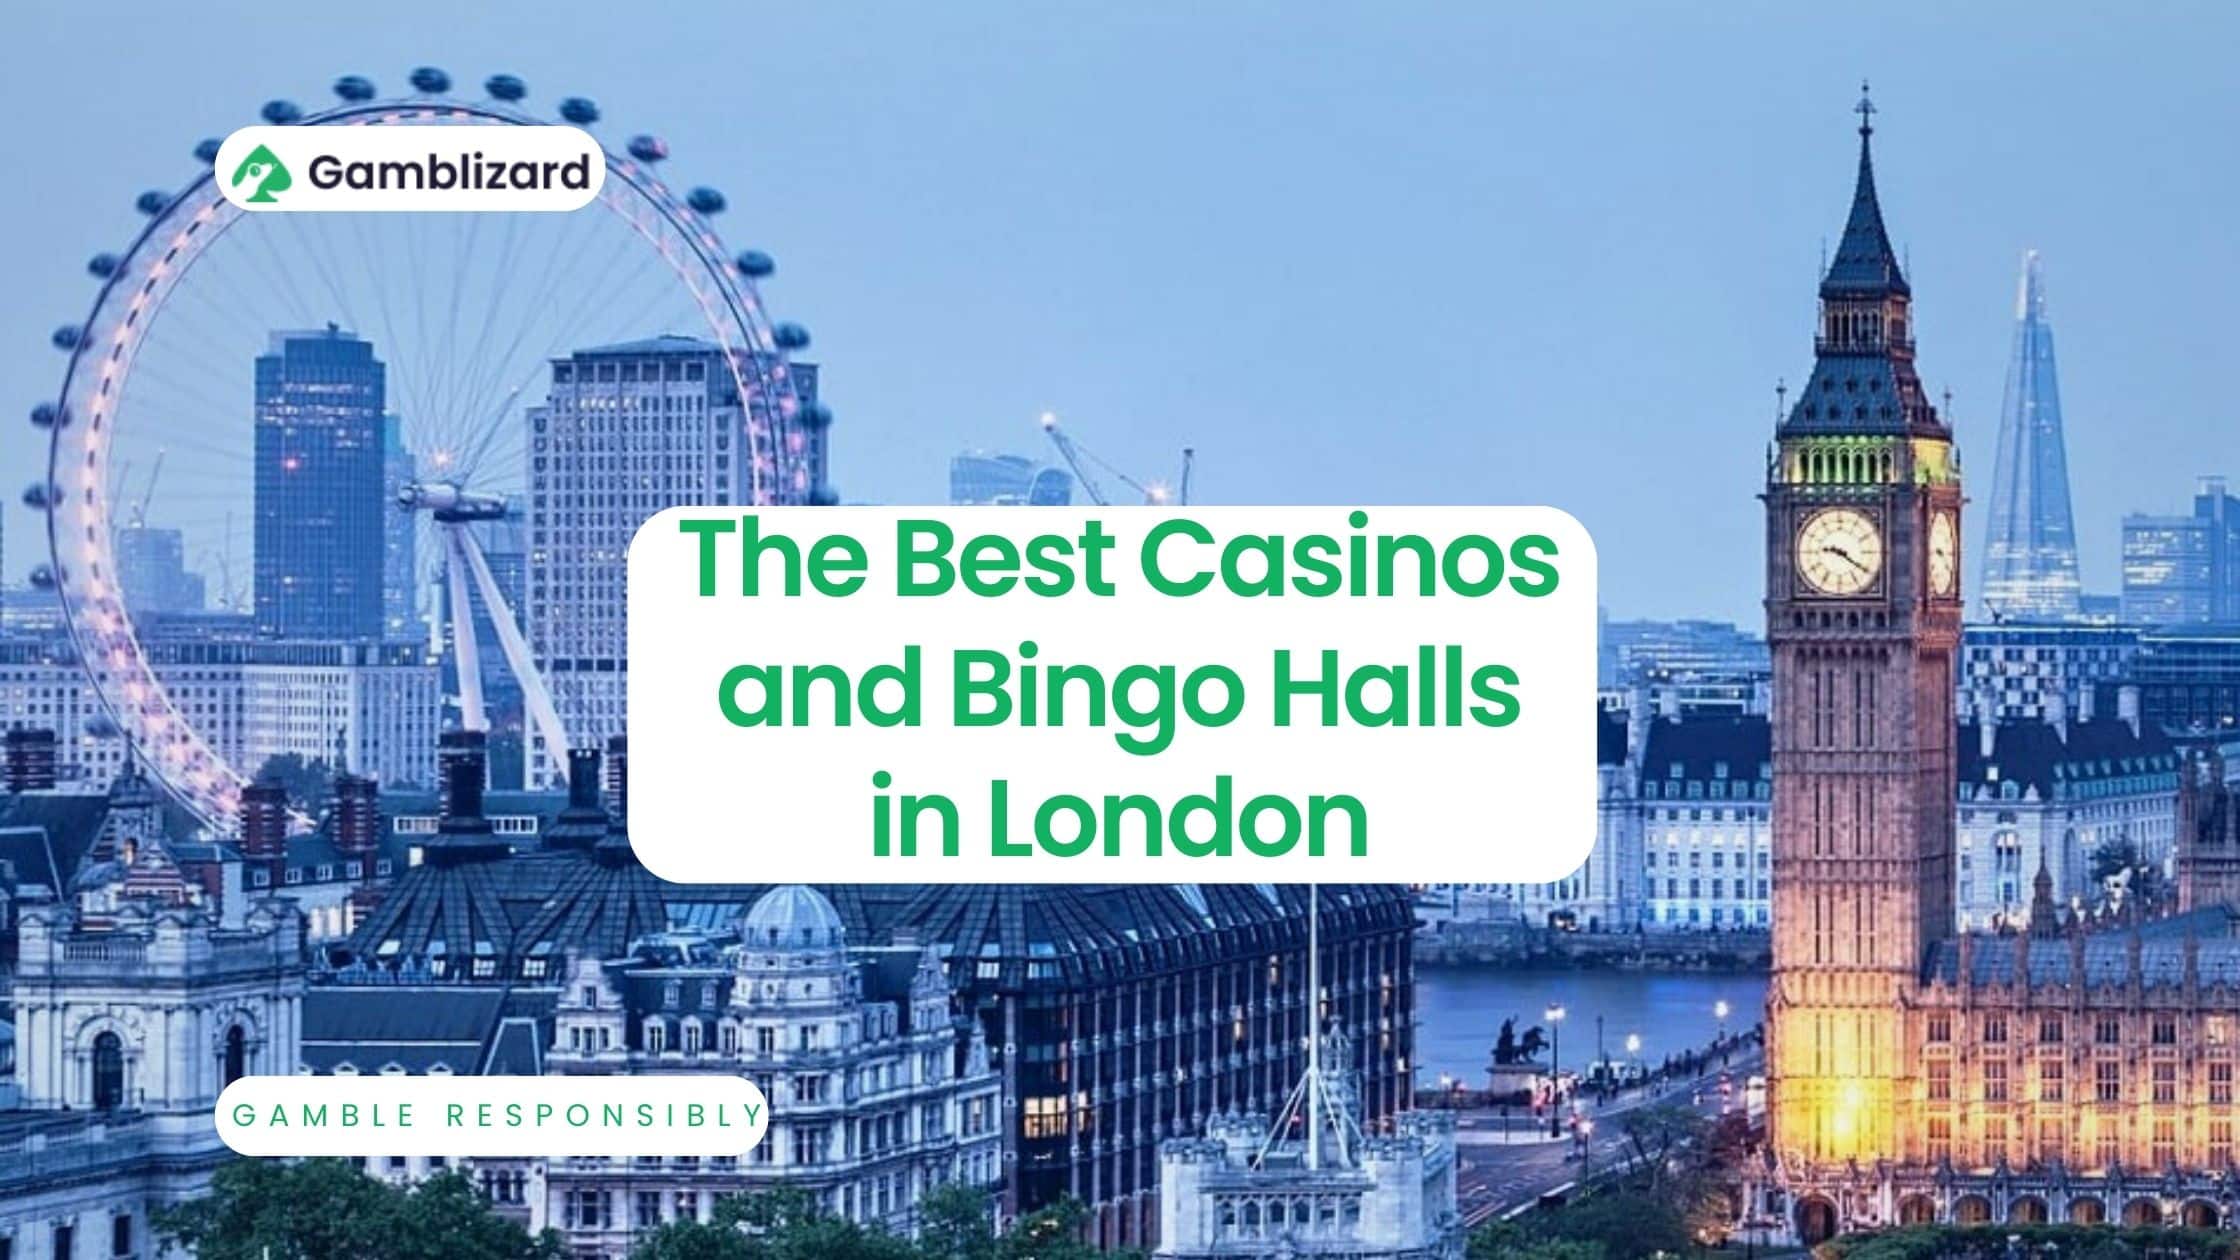 Casinos and bingo halls in London